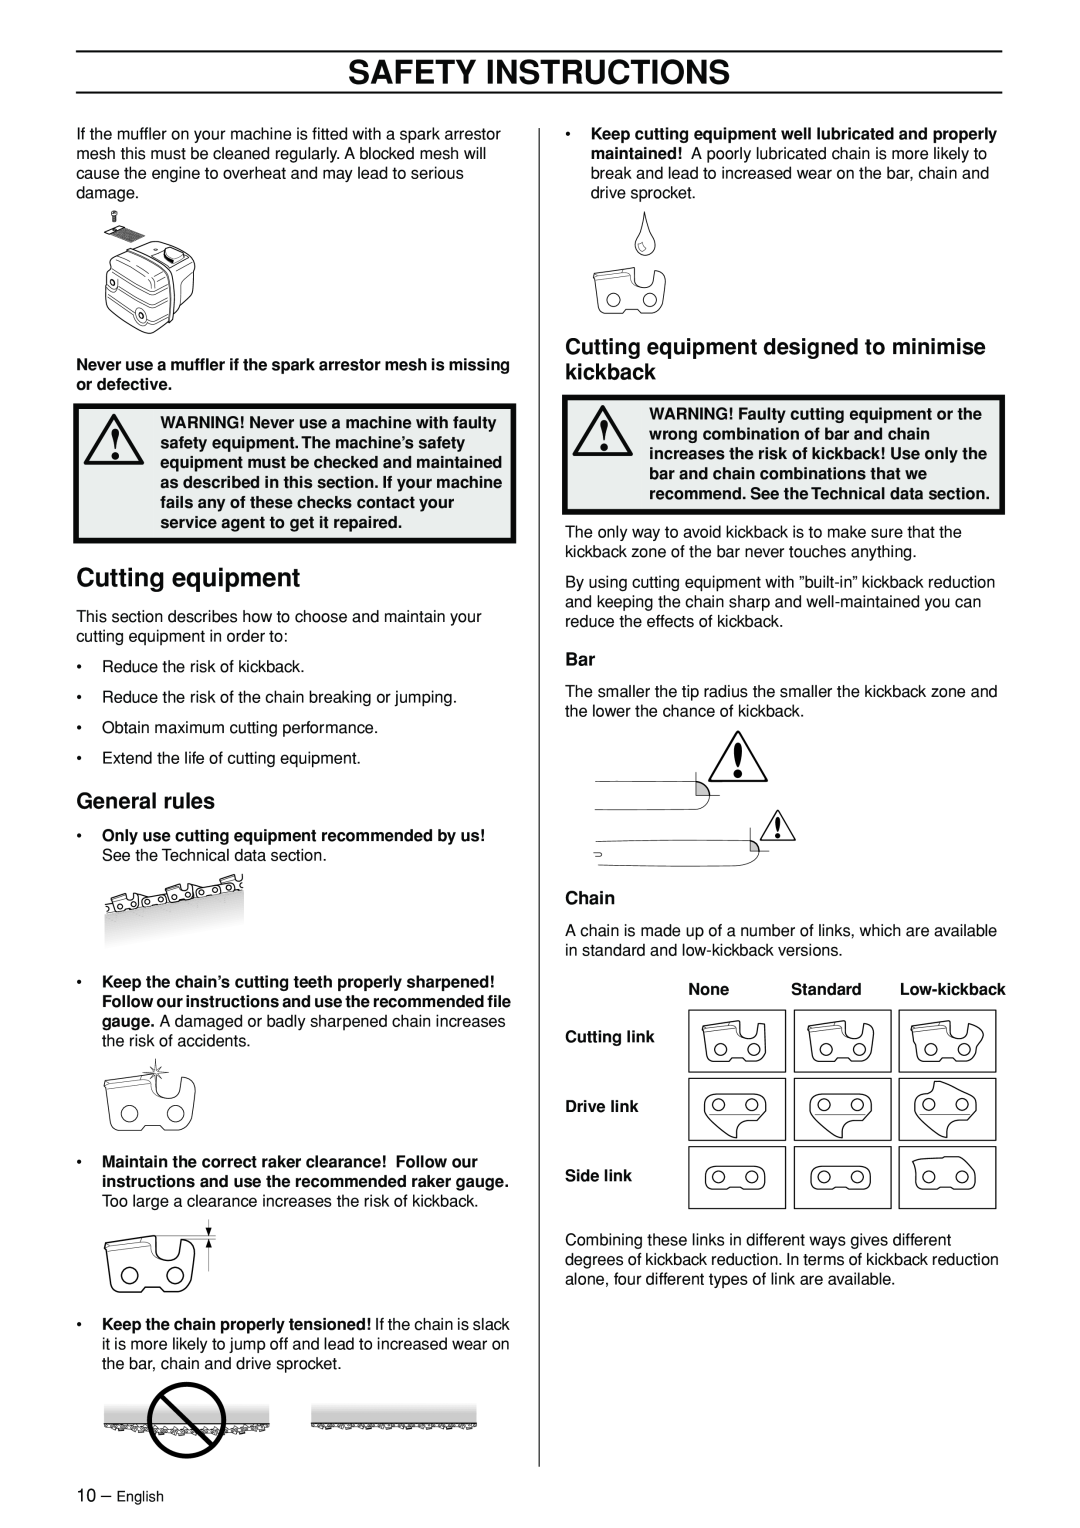 Jonsered CS 2145 EPA II General rules, Cutting equipment designed to minimise kickback, Chain, Safety Instructions 